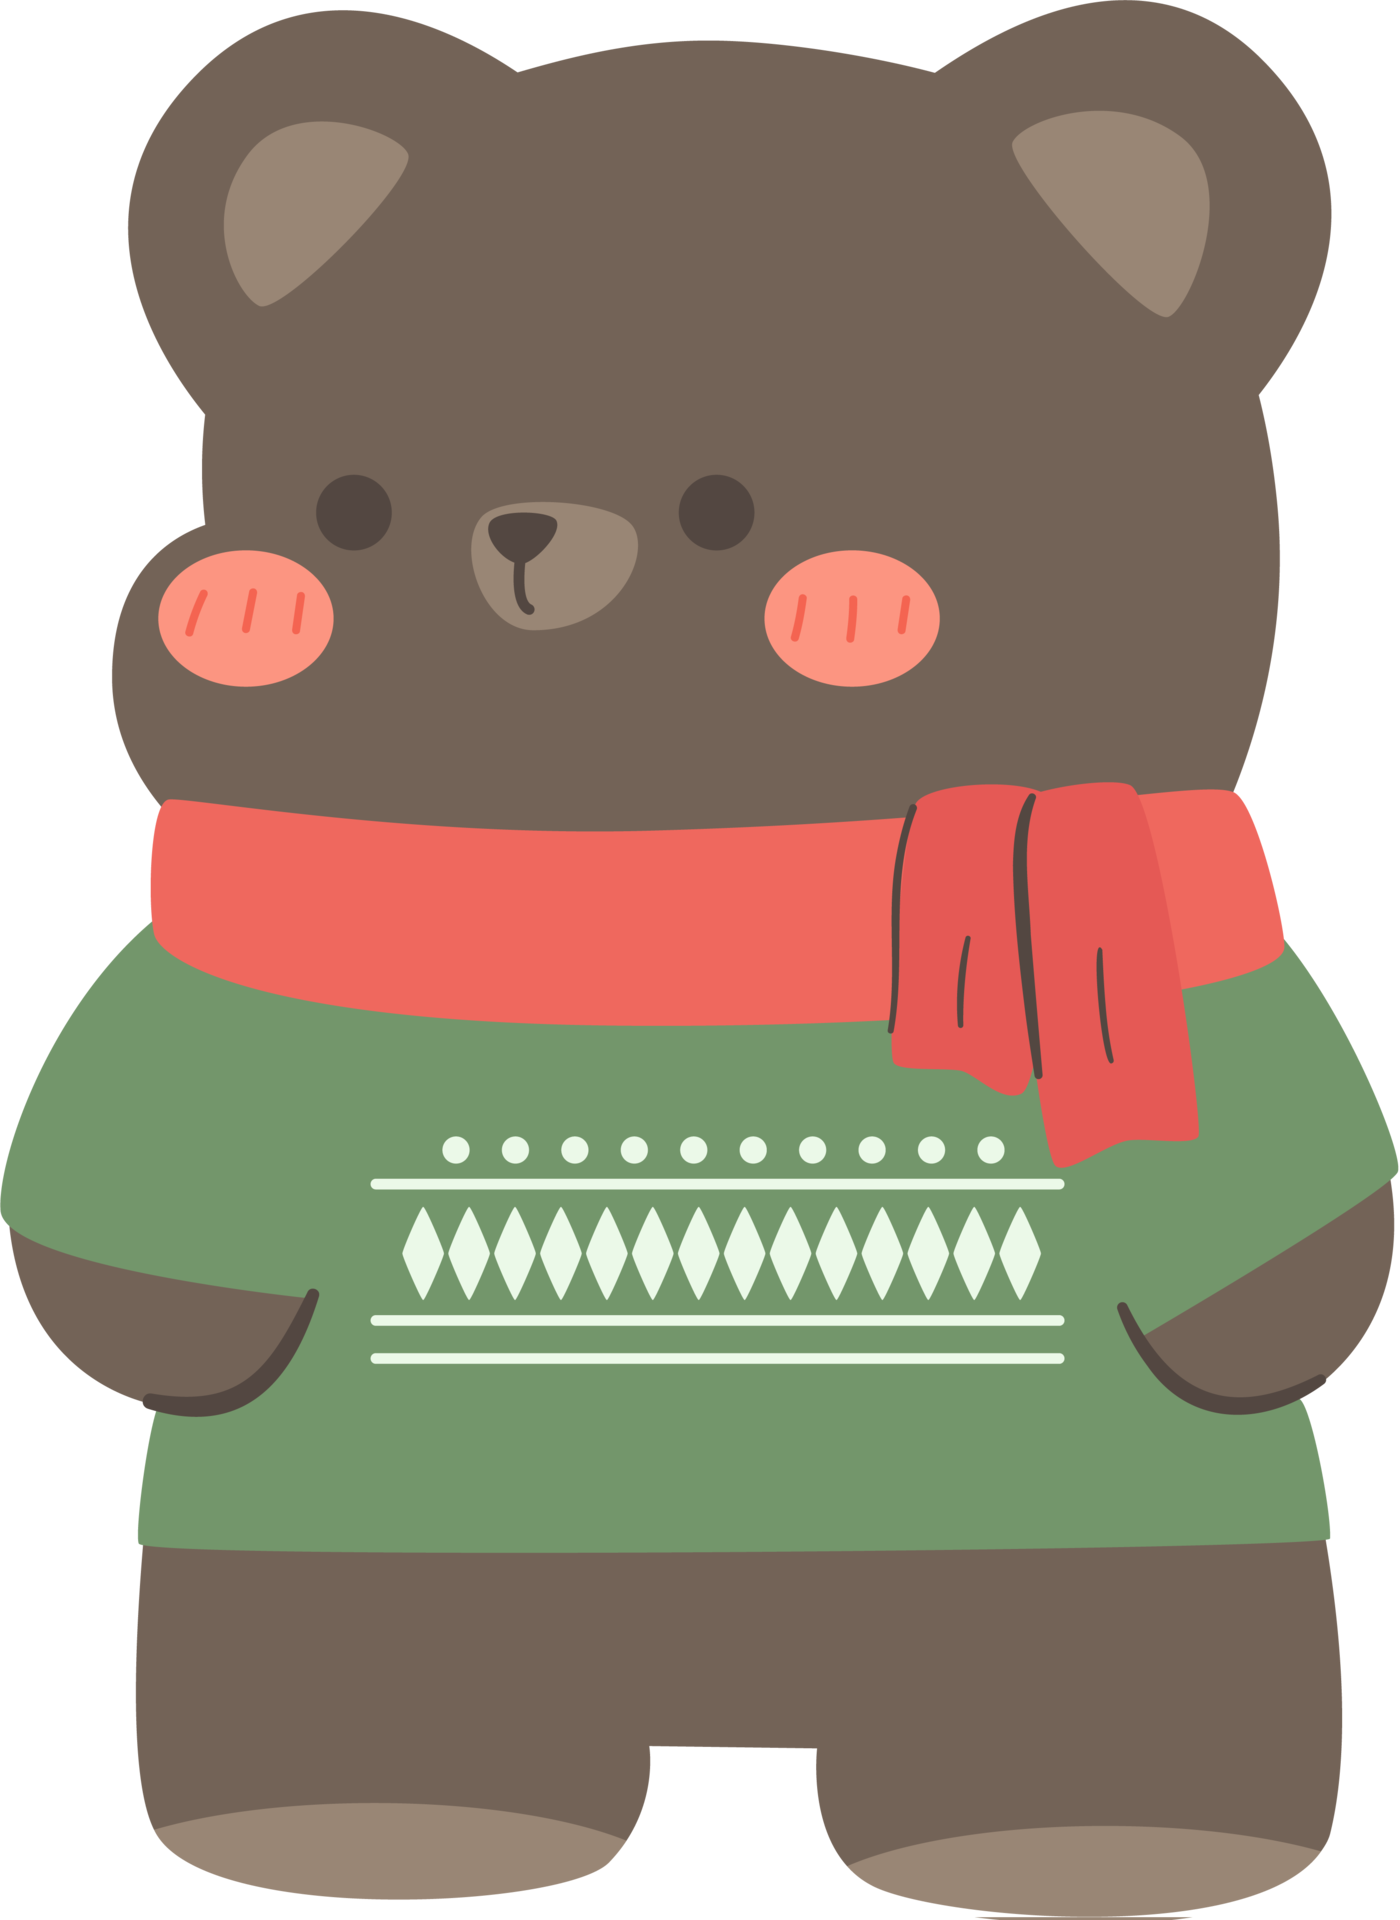 Kawaii Bear Clipart Transparent Background, Hand Painted Of Kawaii Bear  Cartoon Christmas Doodle Illustration, Christmas, Animal, Bear PNG Image  For Free Download